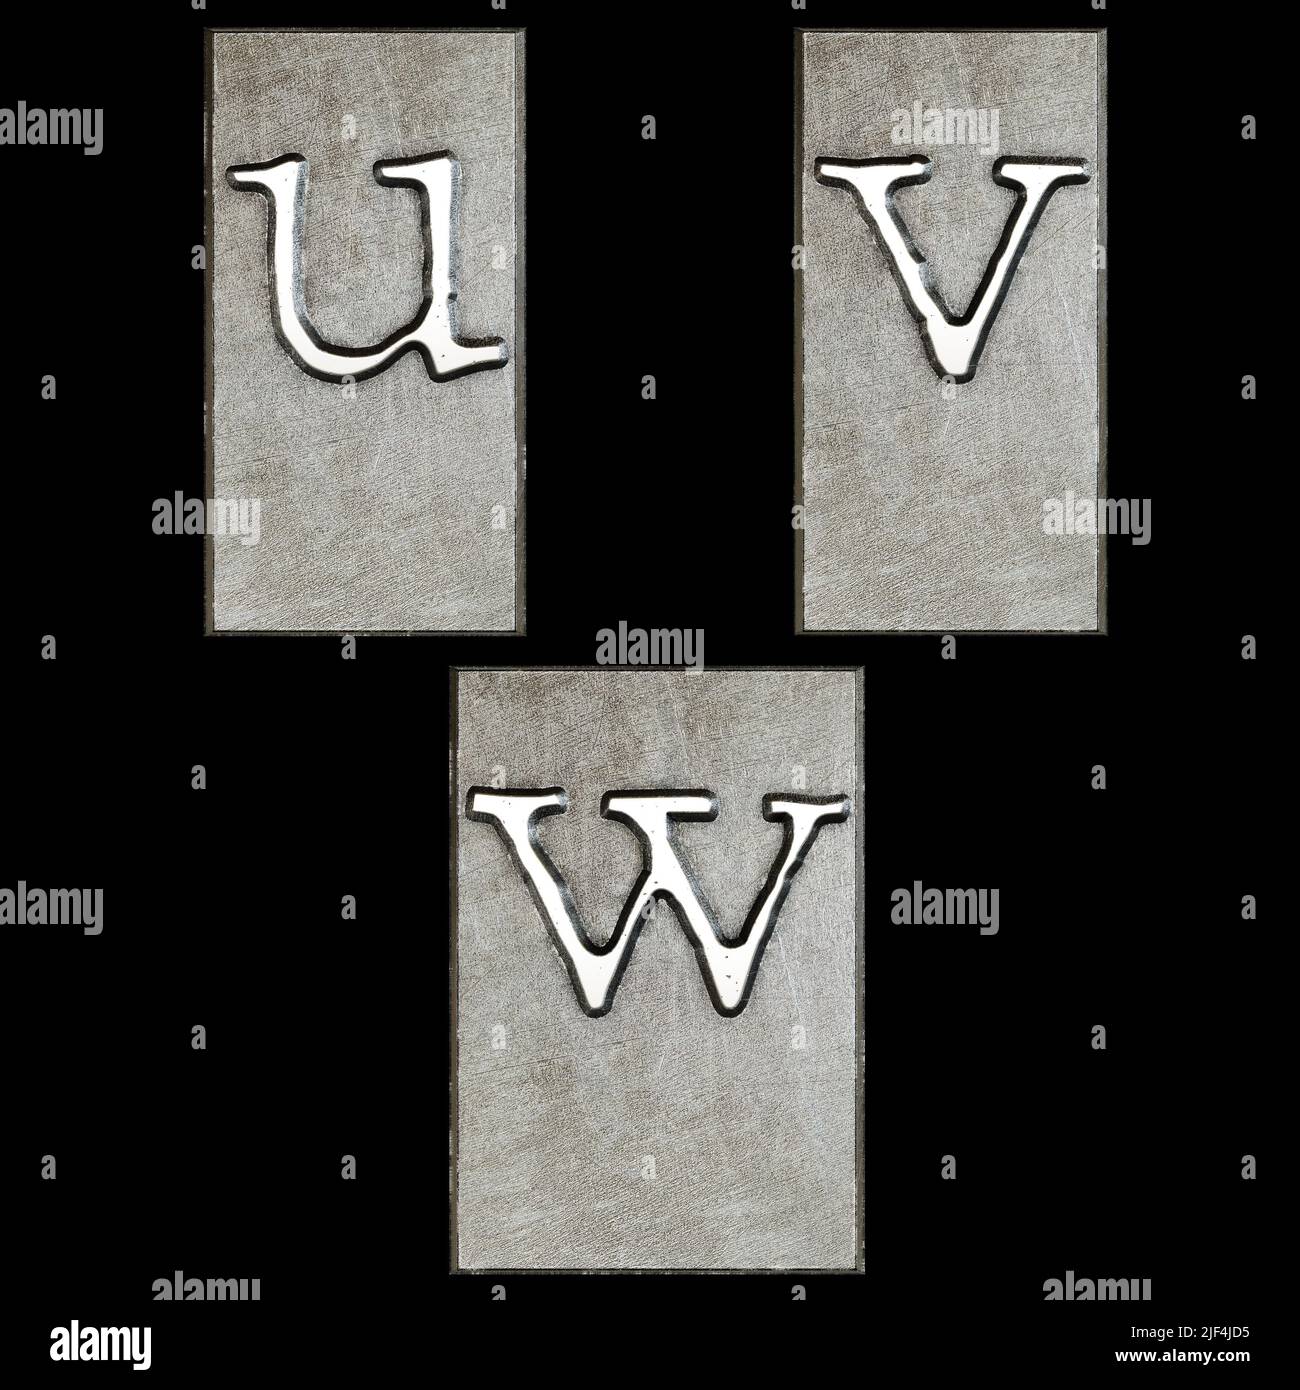 3D rendering of metal typewriter print head alphabet - lower case letters u-w Stock Photo